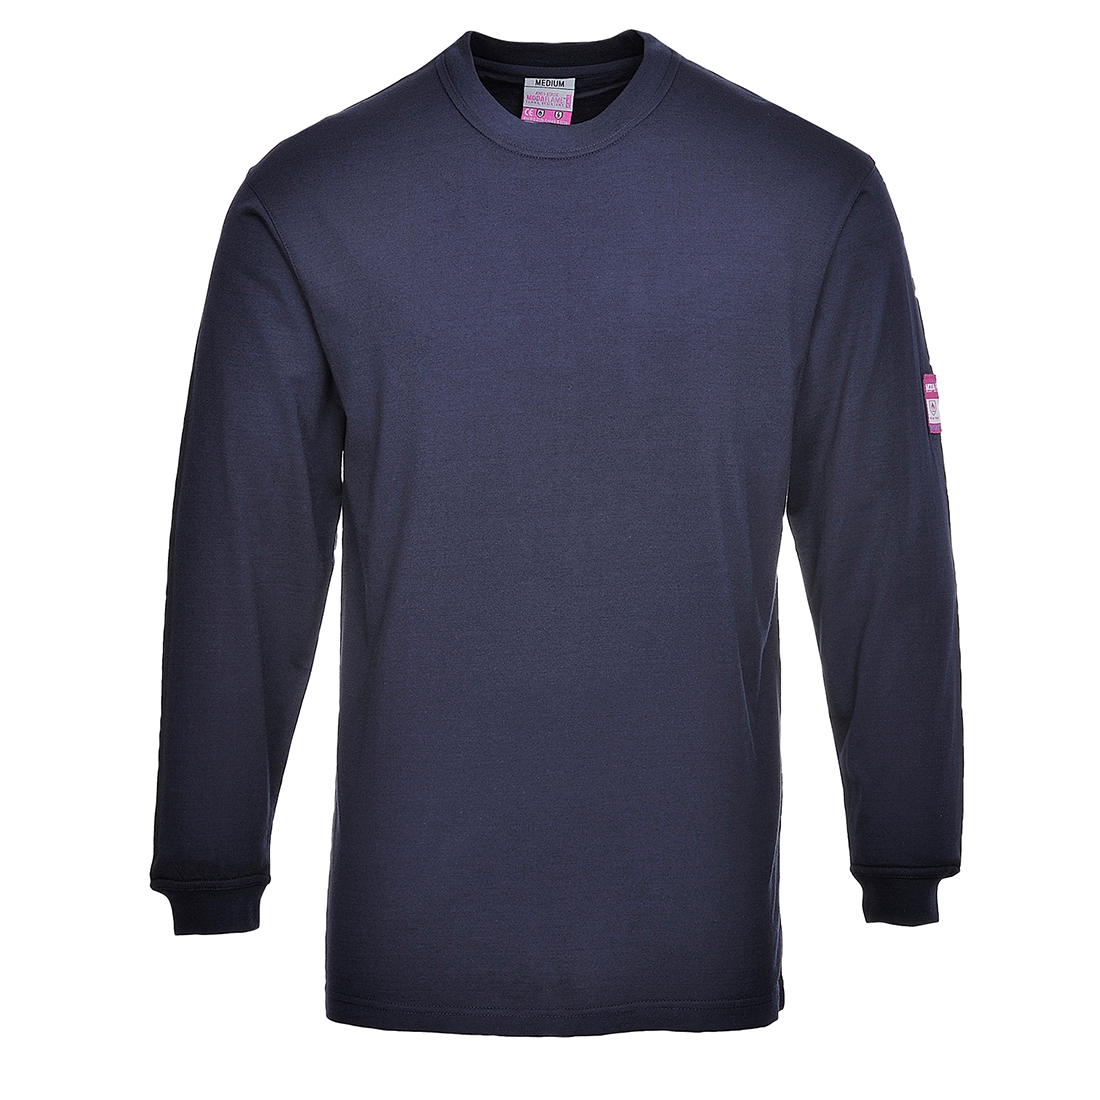 Nehořlavé triko s dlouhými rukávy Flame Resistant Anti-Static Barva: námořní modrá, Velikost: S